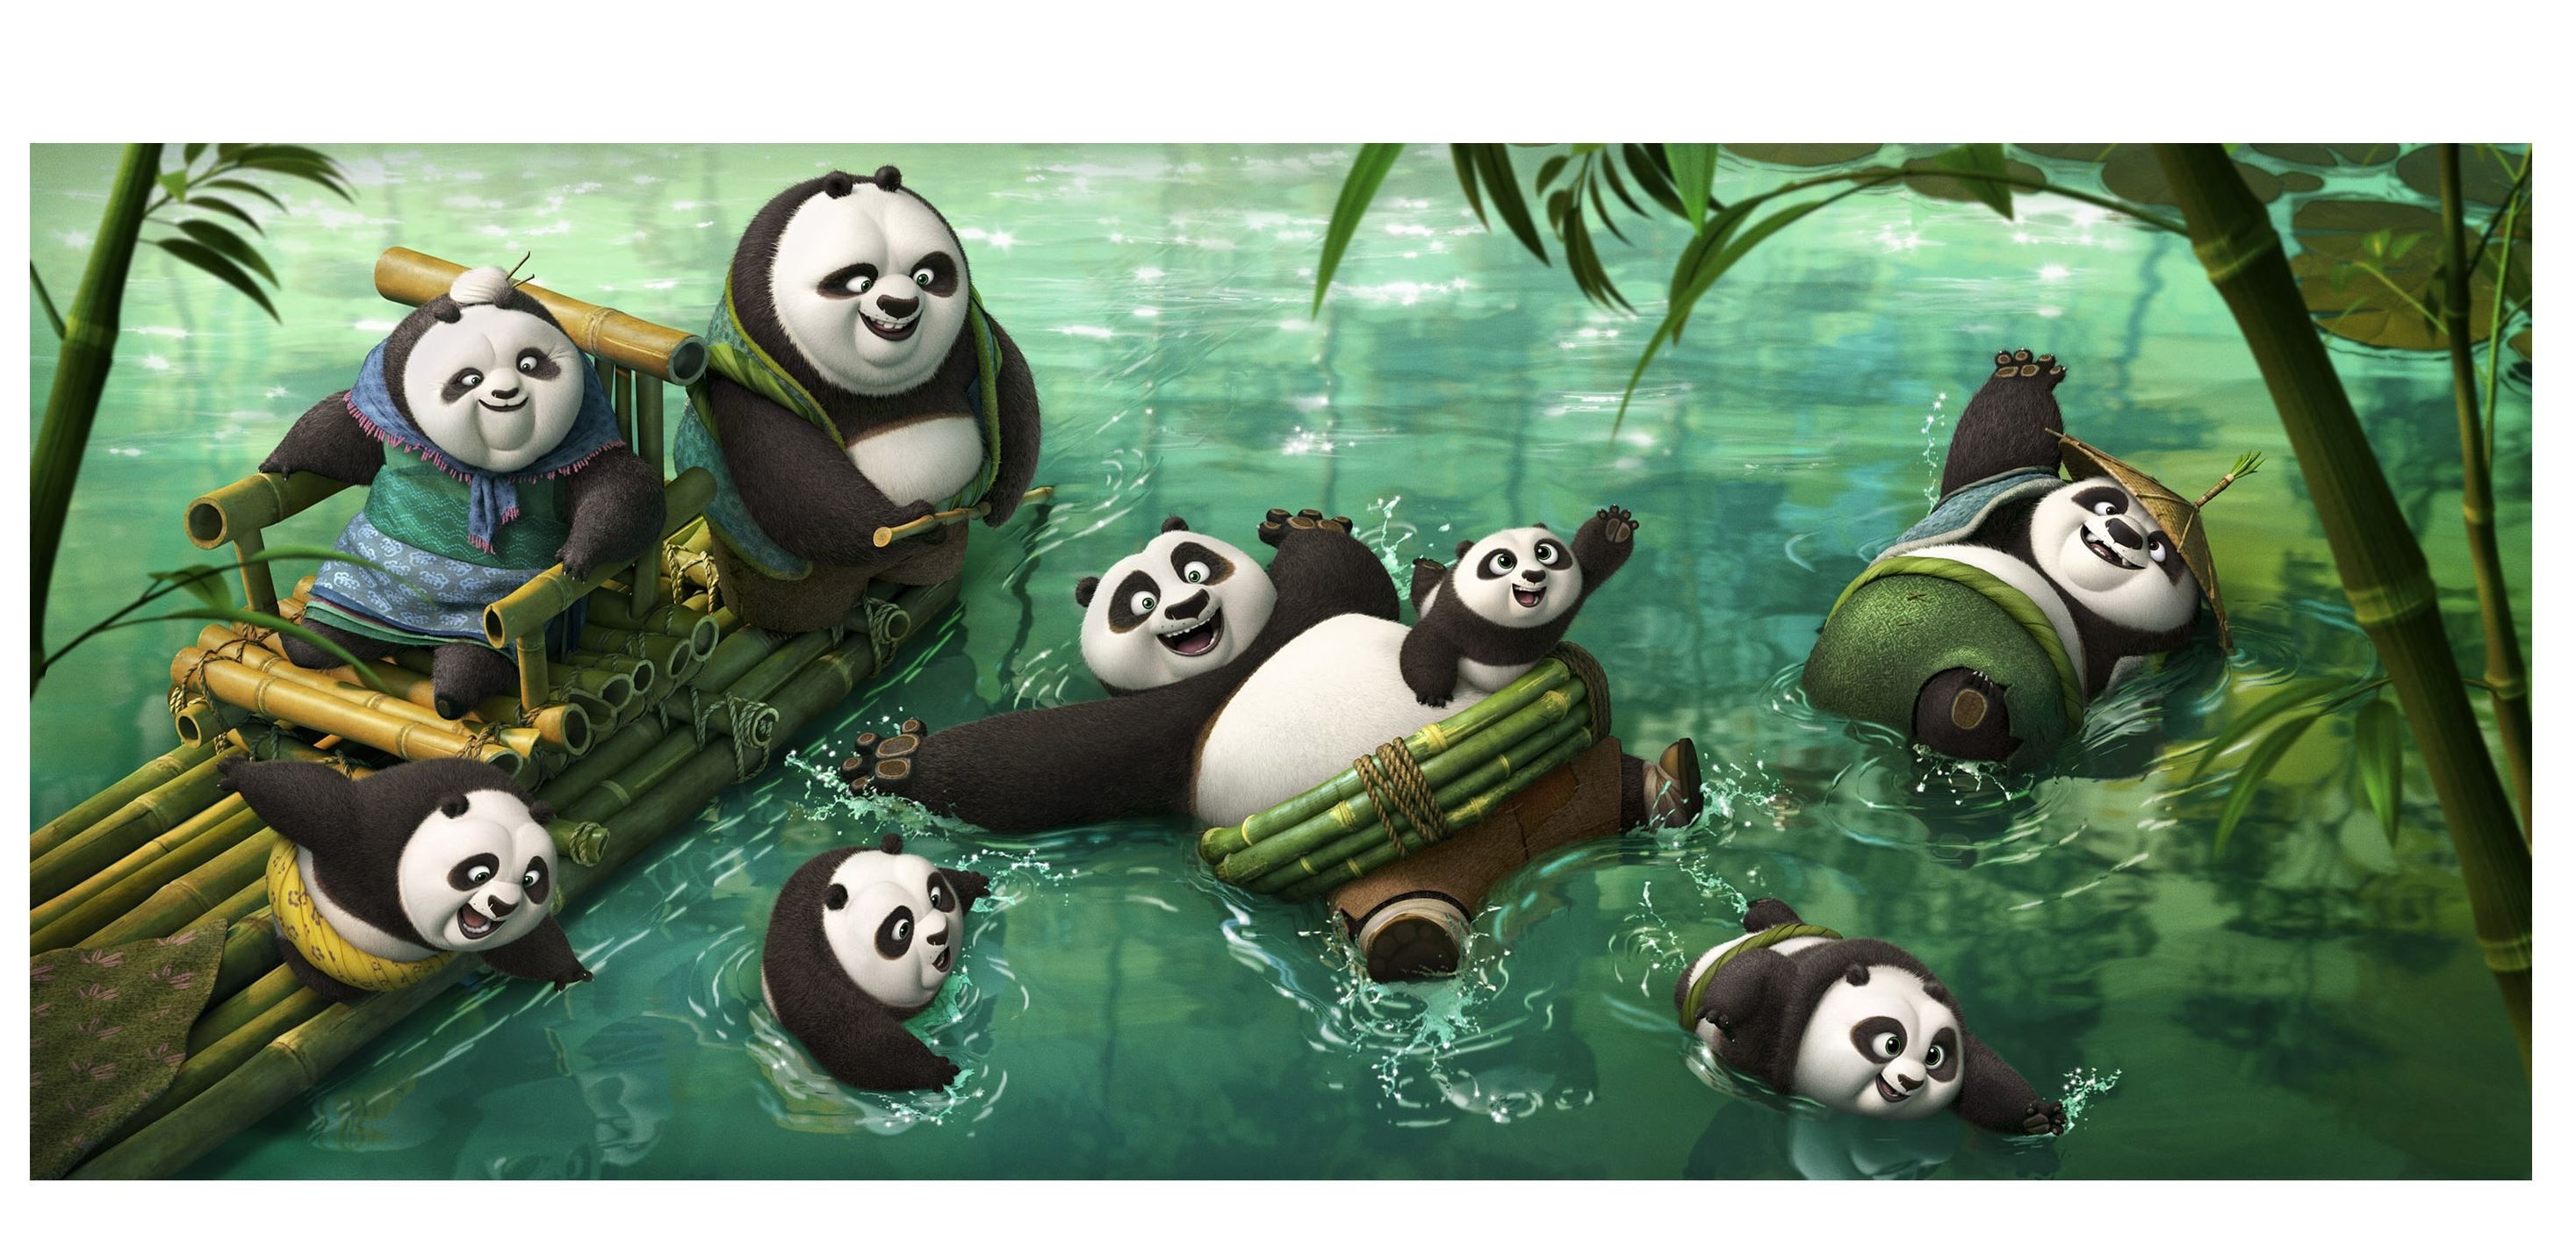 Kung Fu Panda, Splendid chapter, Movie review, Animated masterpiece, 2940x1430 Dual Screen Desktop